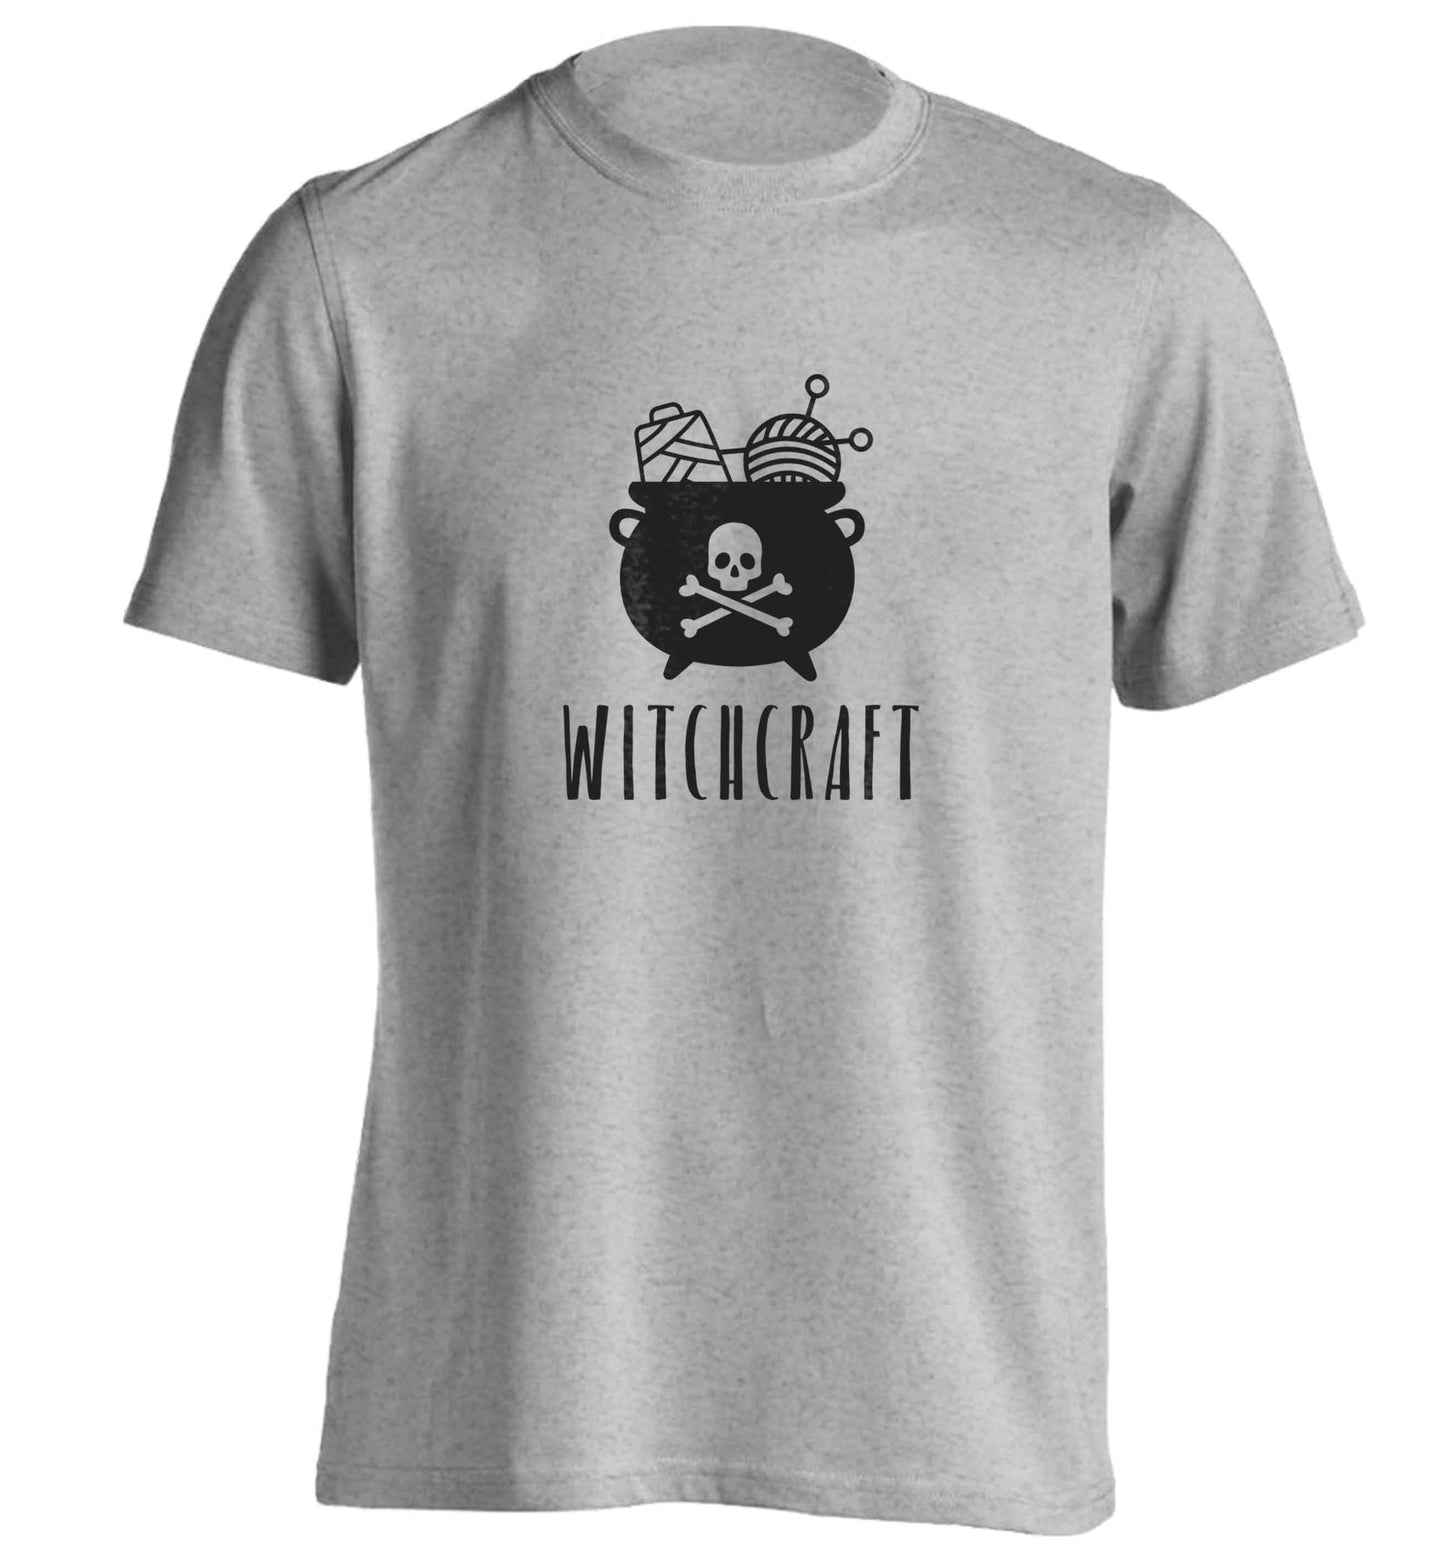 Witchcraft adults unisex grey Tshirt 2XL